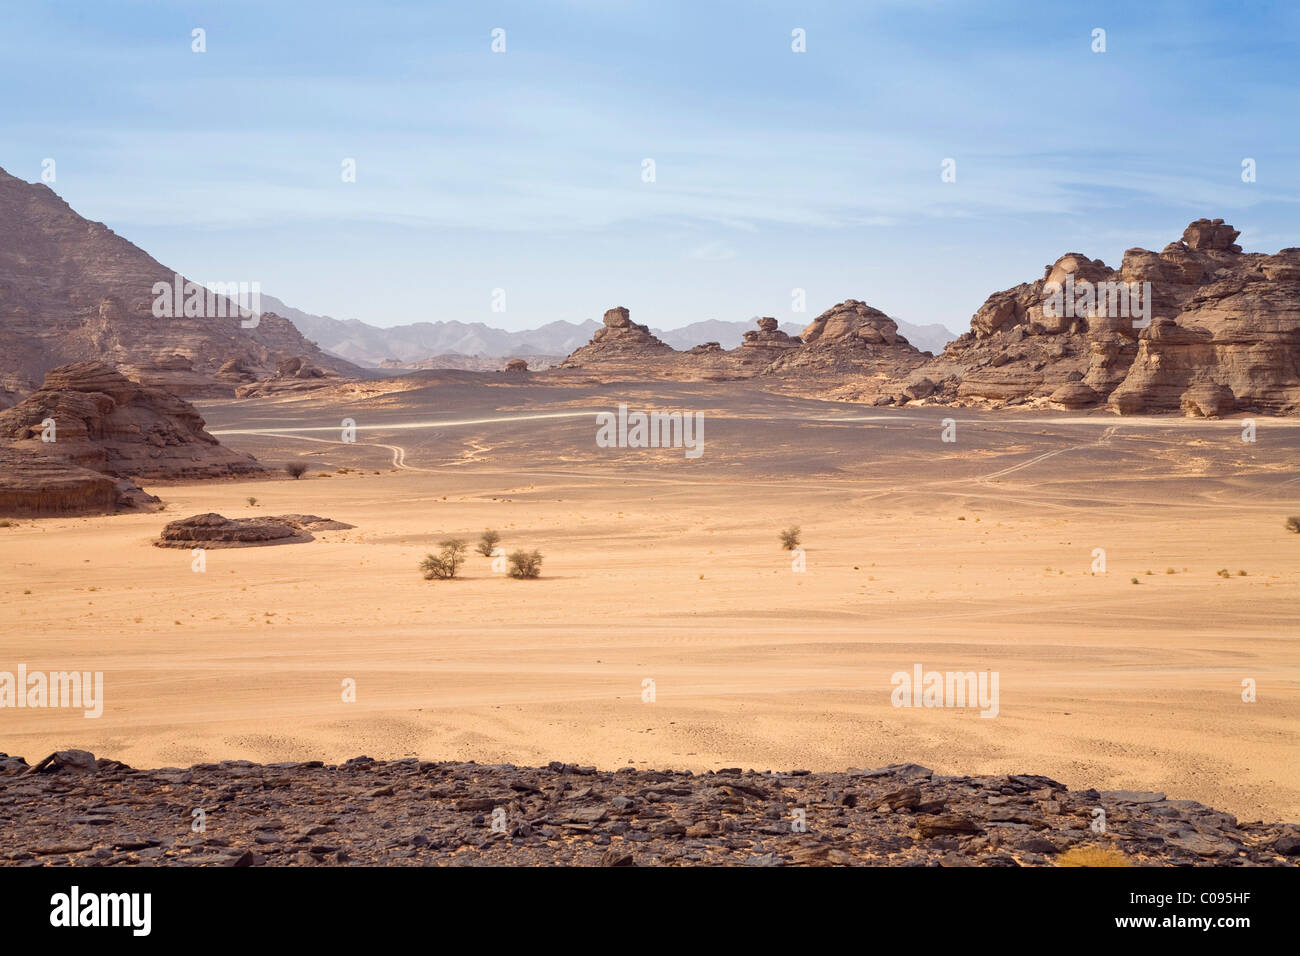 Rock formations in the Libyan Desert, Wadi Awis, Akakus Mountains, Libyan Desert, Libya, Africa Stock Photo